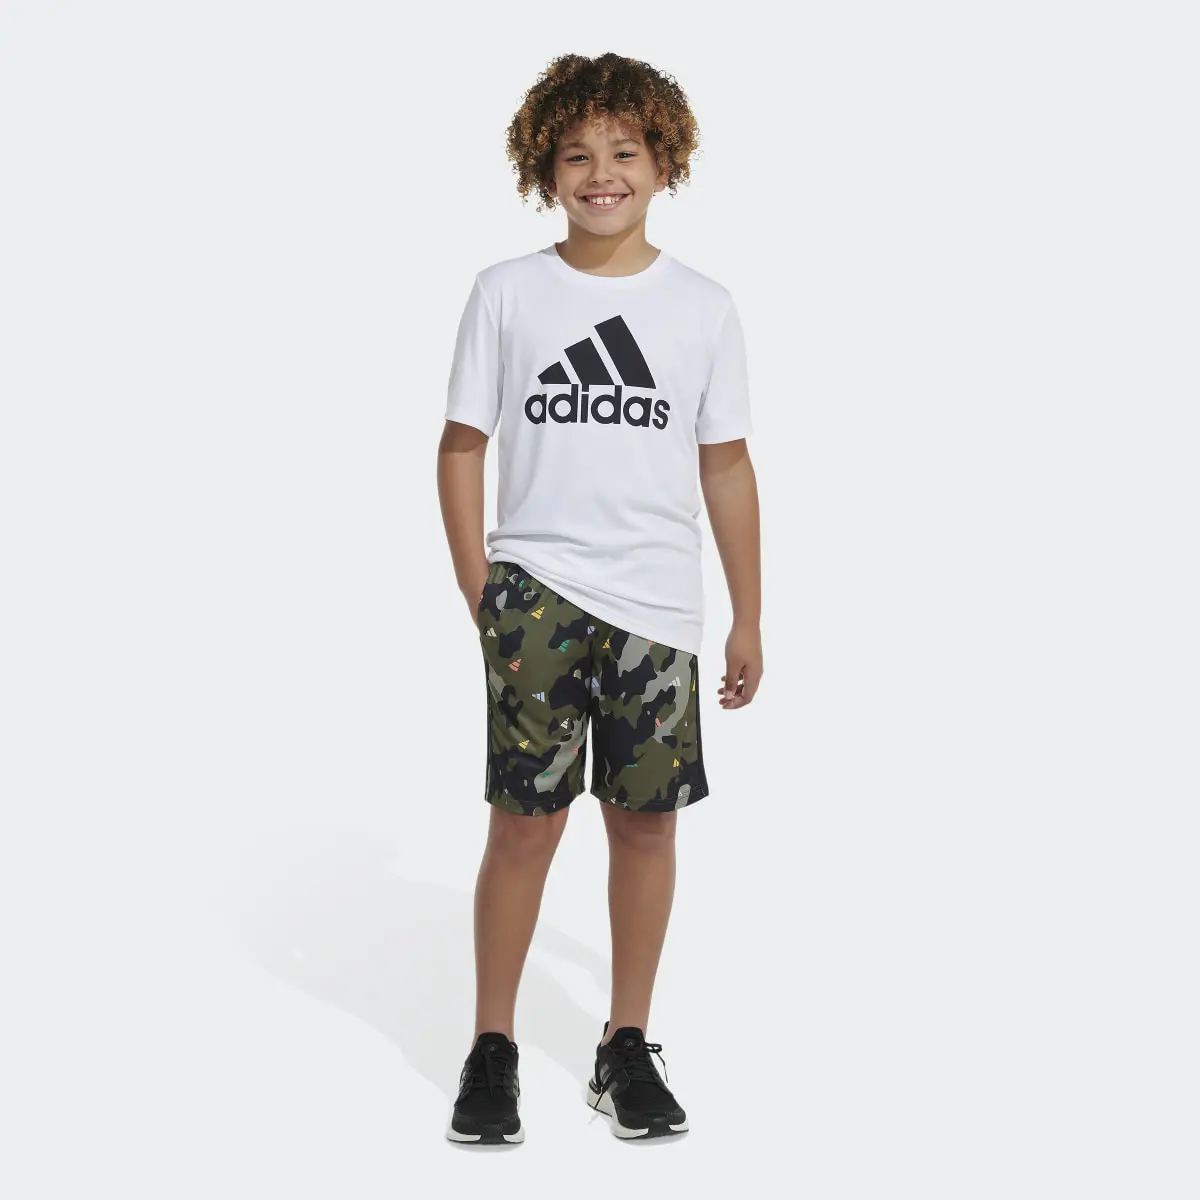 Adidas AEROREADY® Elastic Waistband Camo Shorts. 1